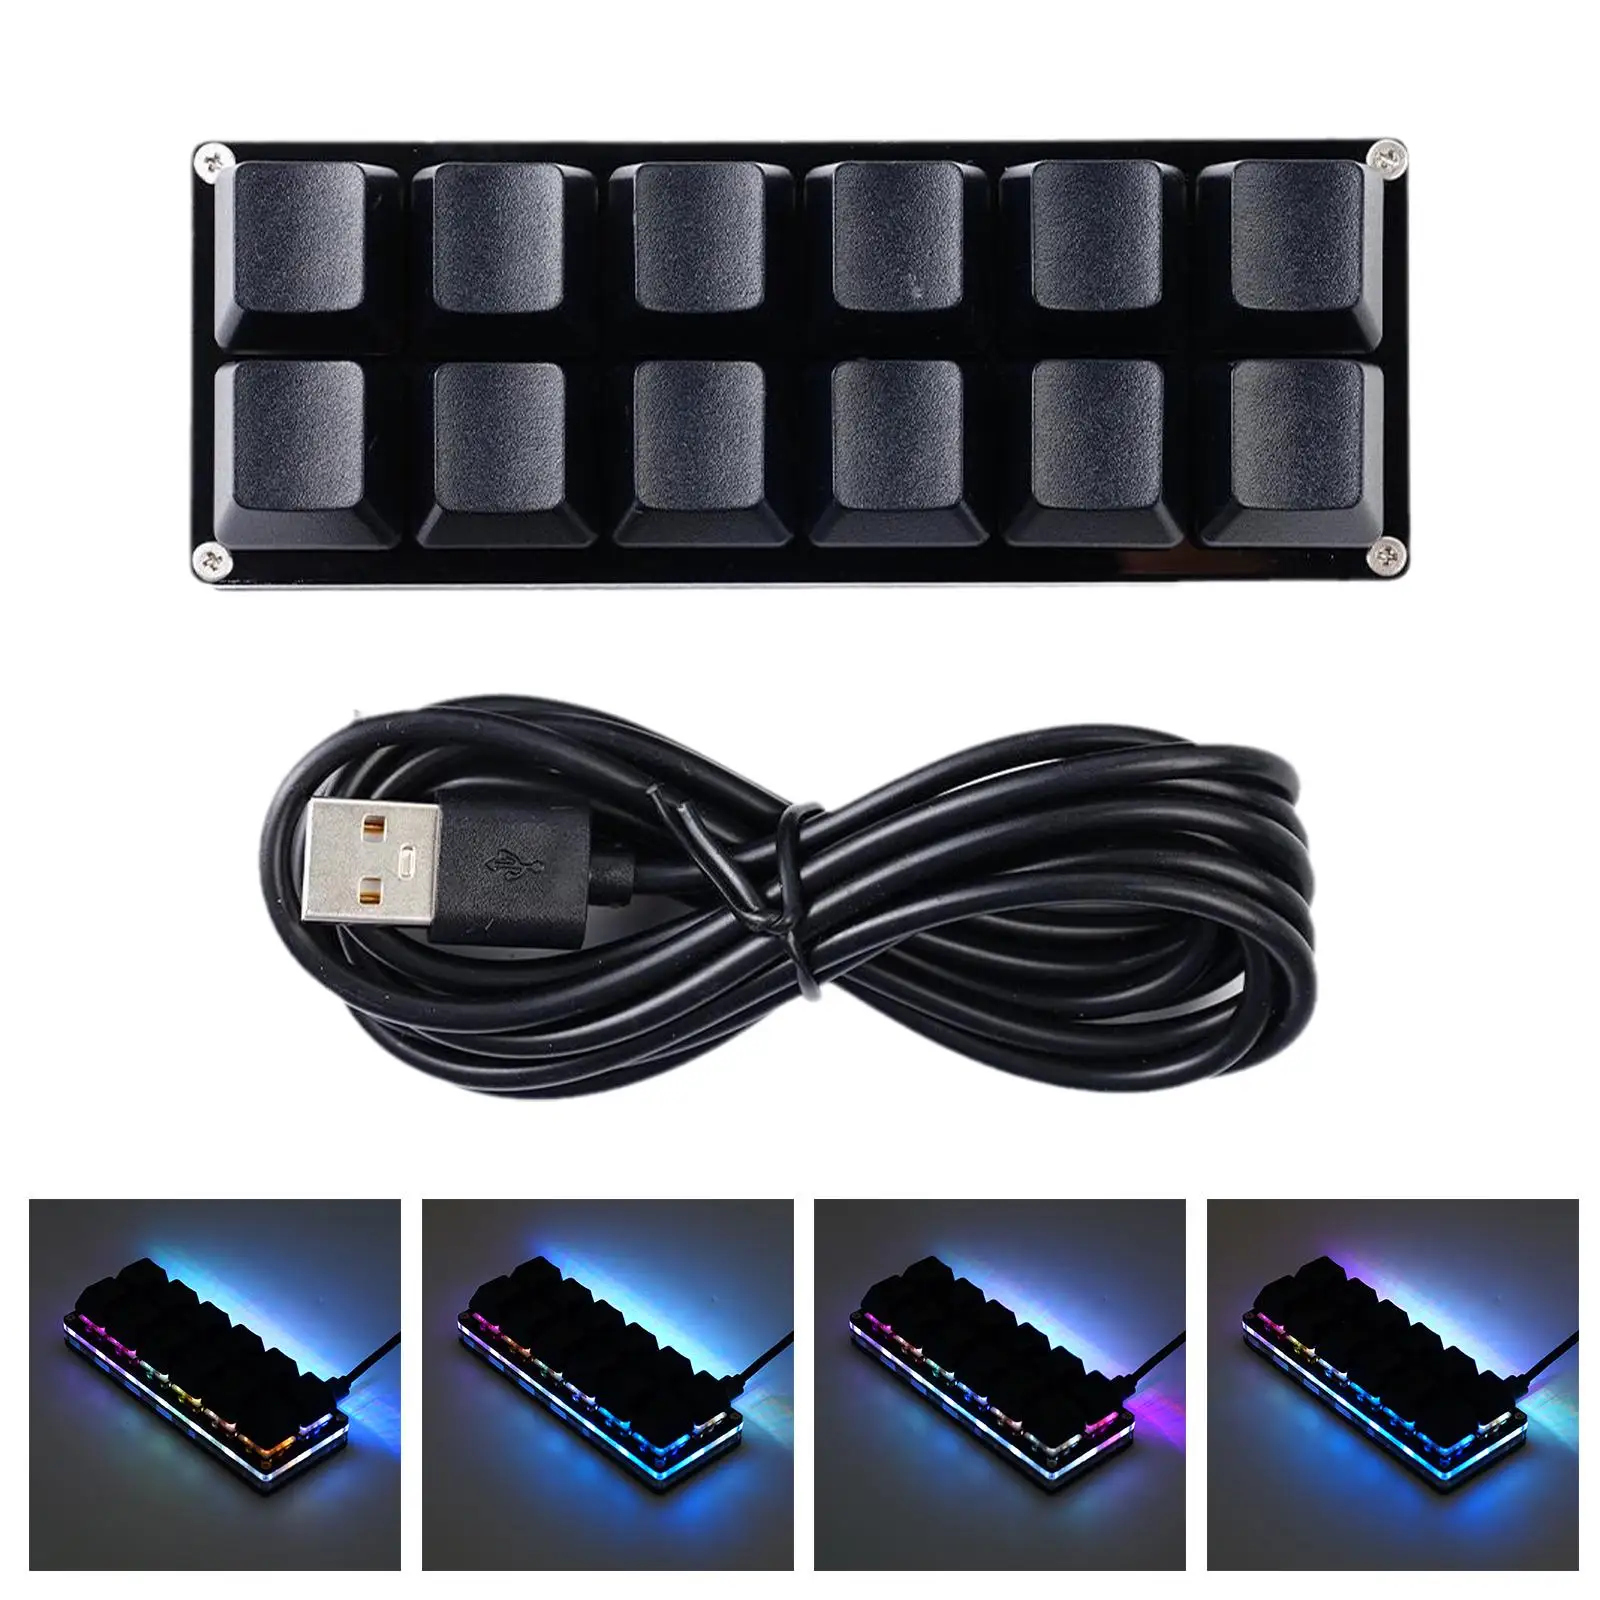 DIY Custom USB Mini Keypad RGB Programmable Macro Keyboard Gamer Keypad Gaming Drawing Mechanical Keyboard 2/6/9/12 Keys